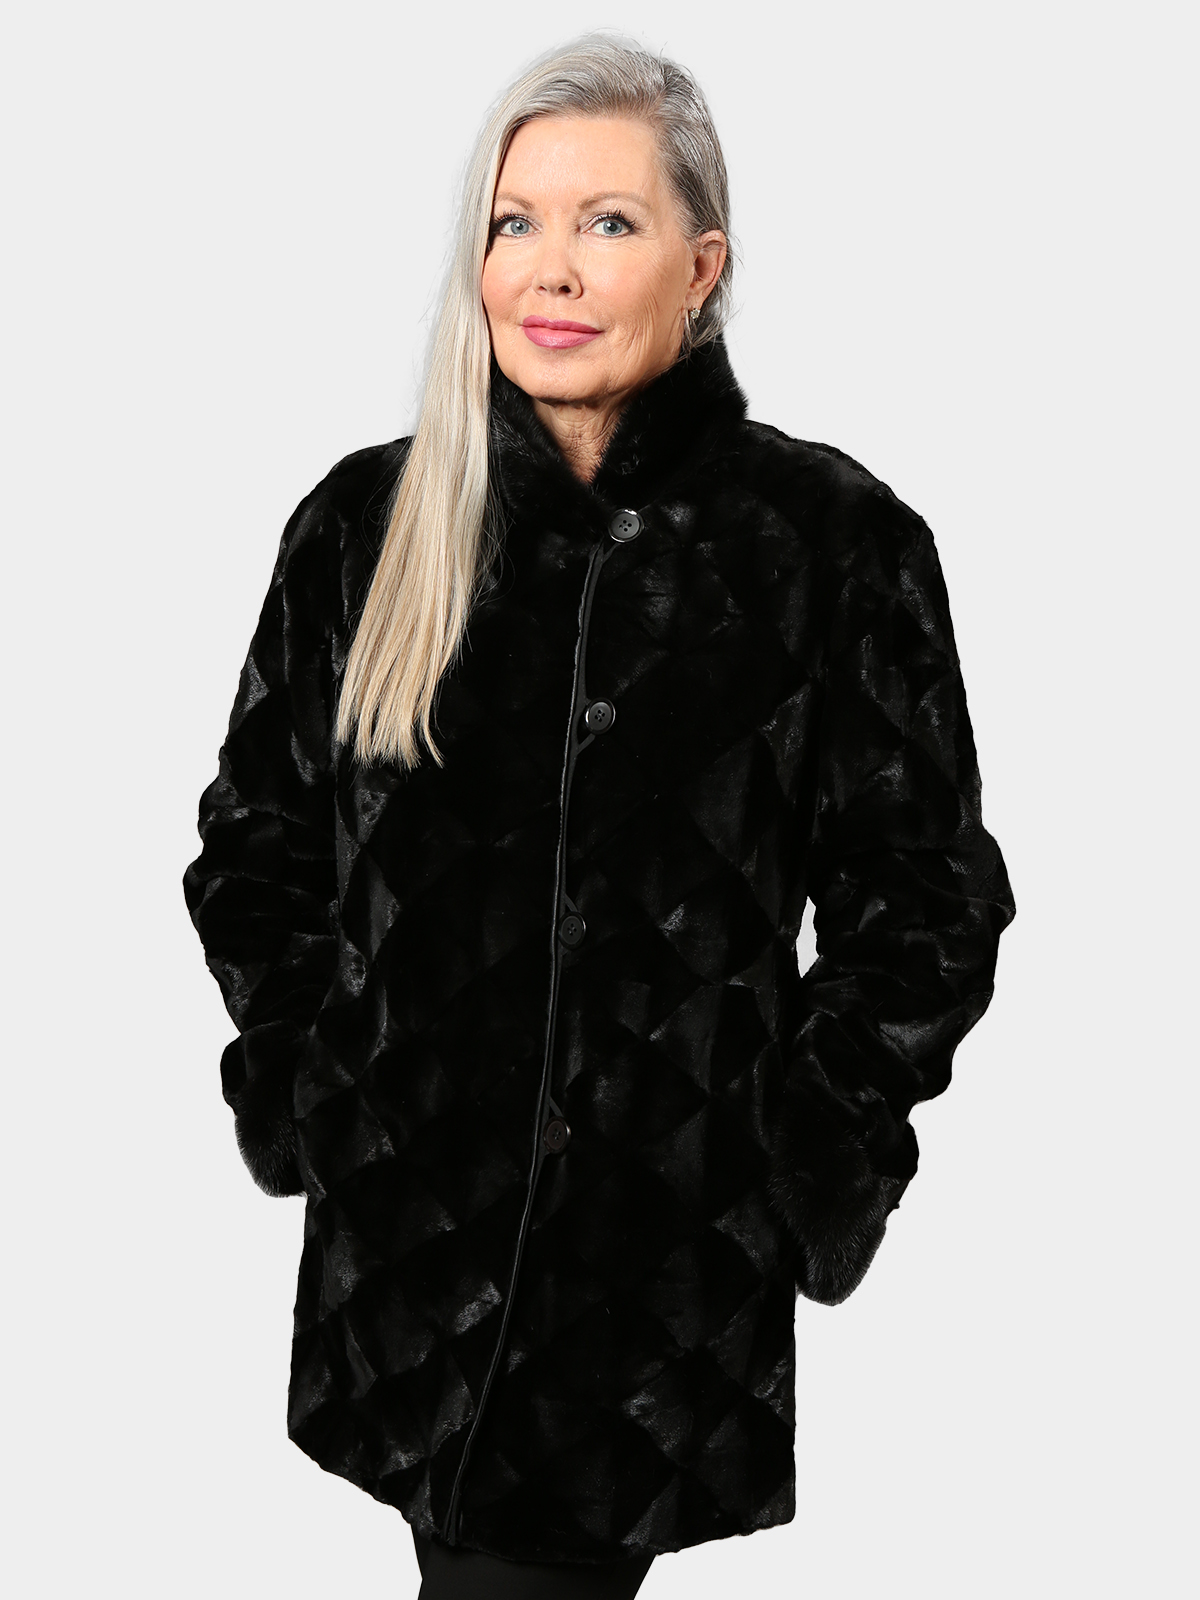 Woman's Black Semi Sheared Sculptured Mink Fur Jacket Reversible to Rain Taffeta